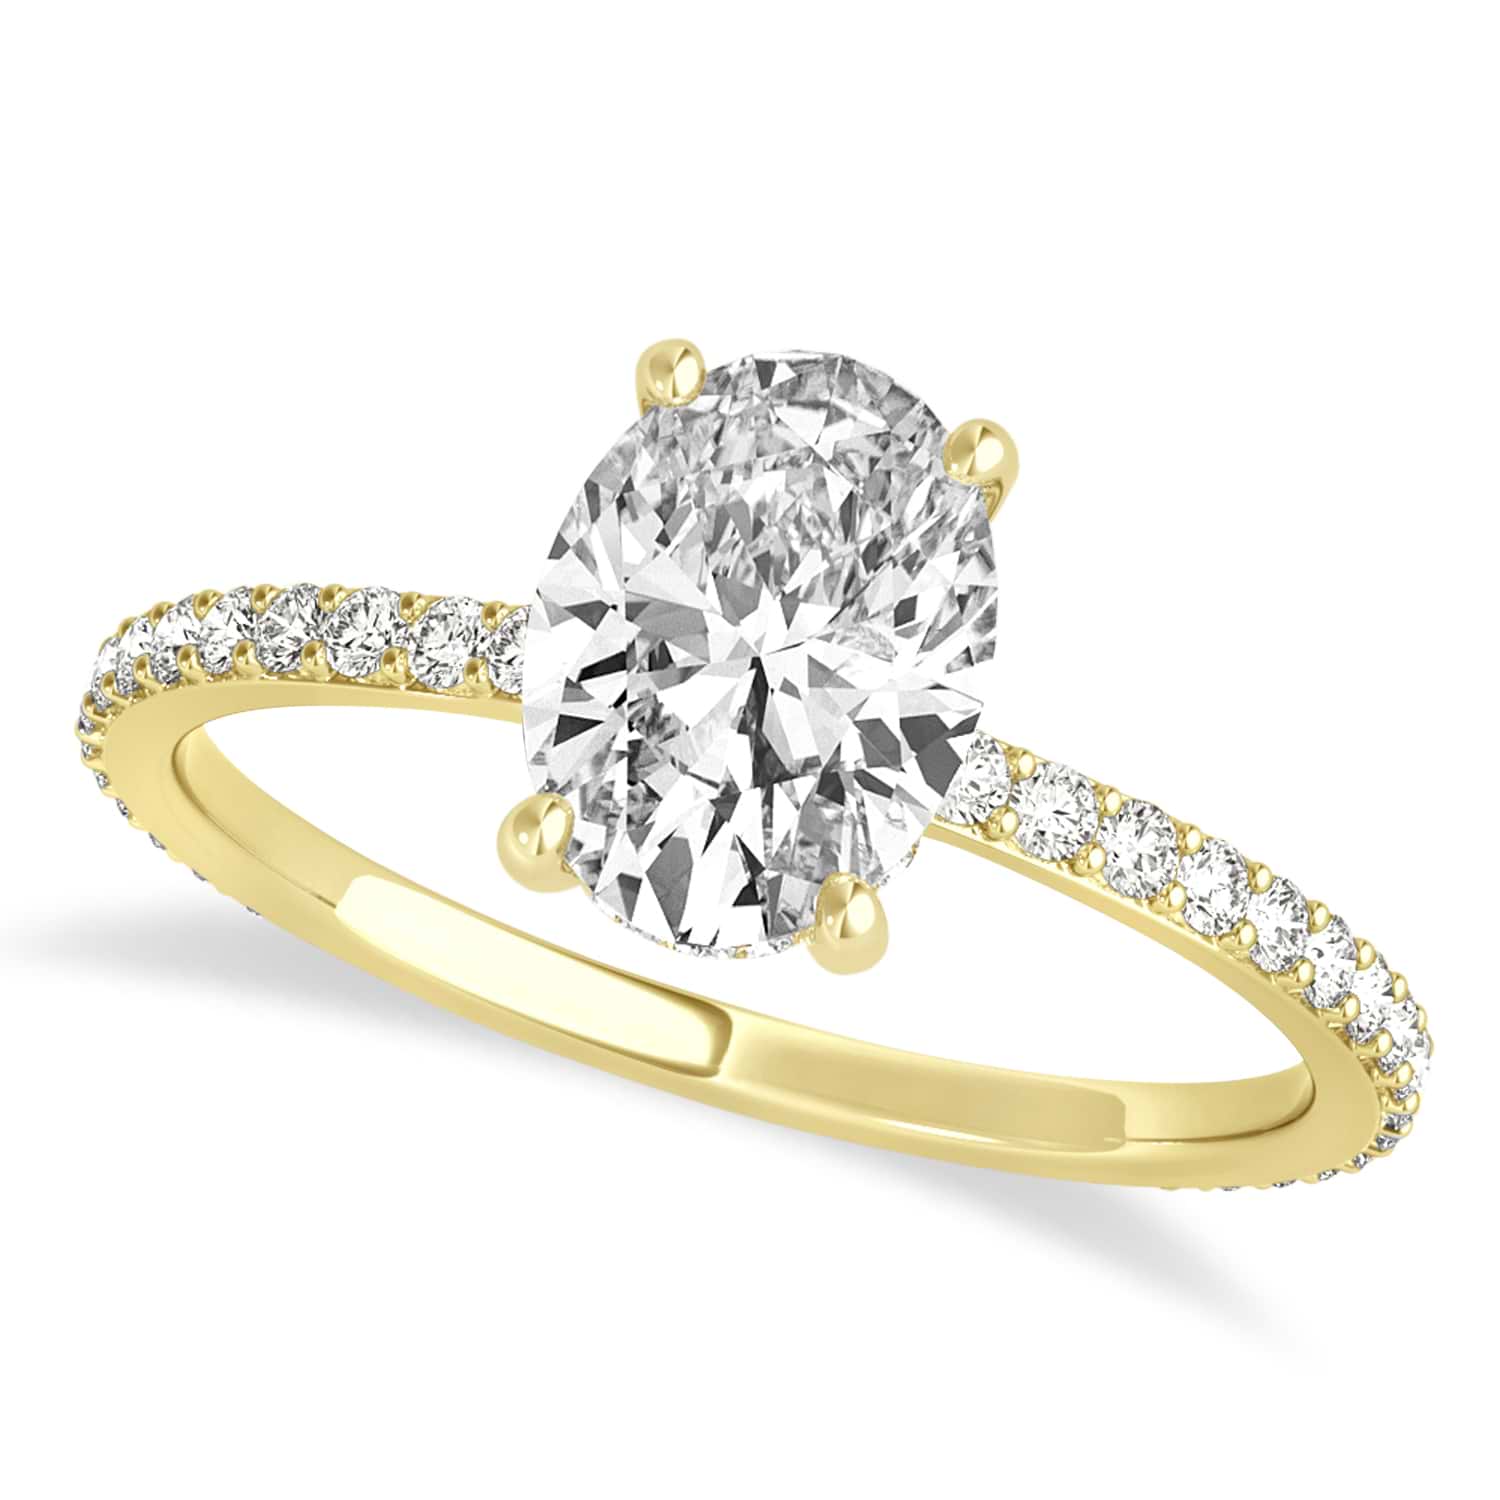 Oval Diamond Hidden Halo Engagement Ring 18k Yellow Gold (2.50ct)